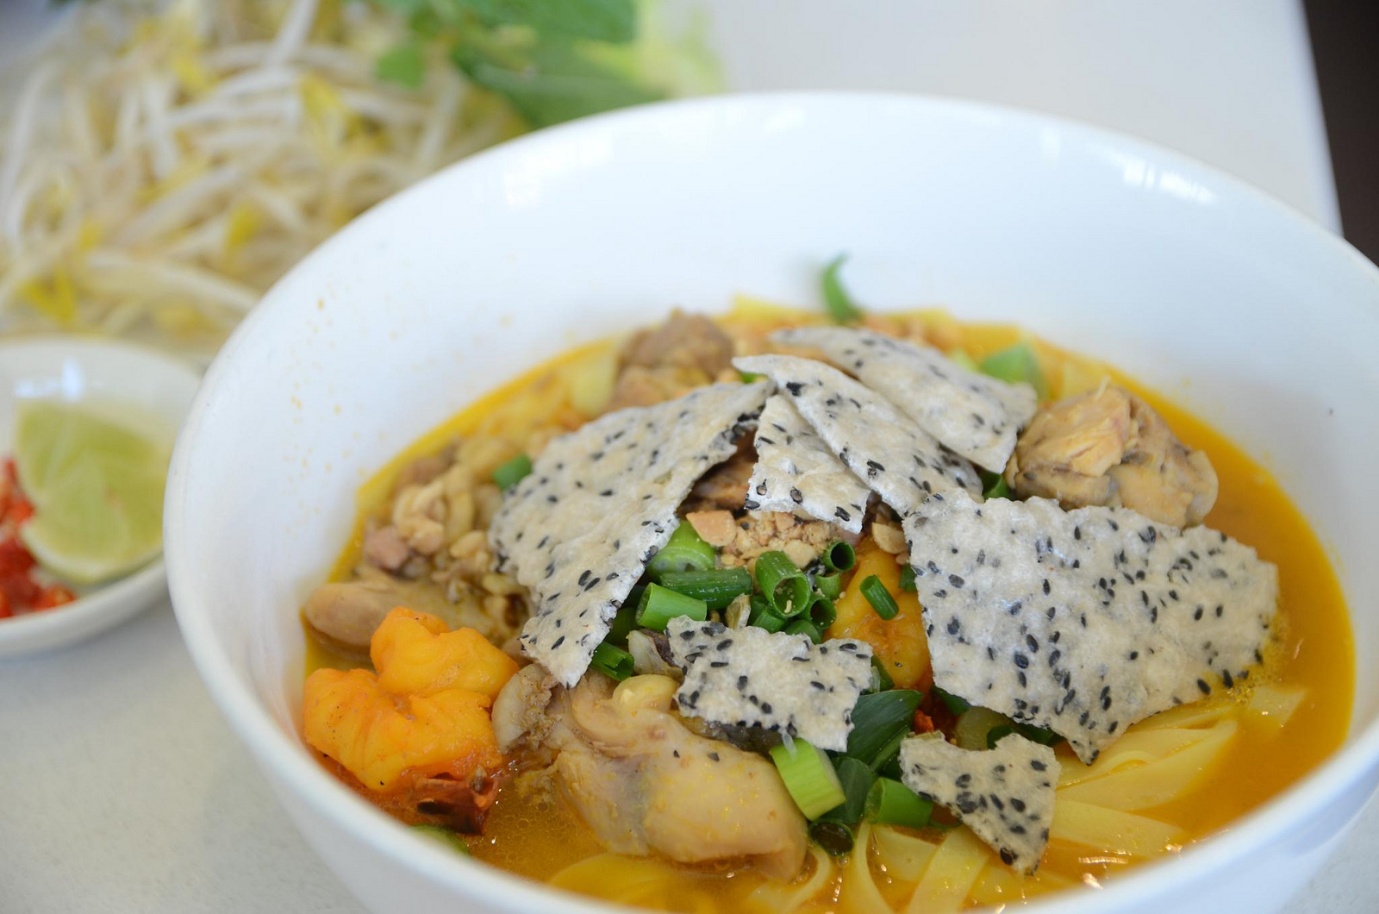 An authentic flavor of Quang noodle